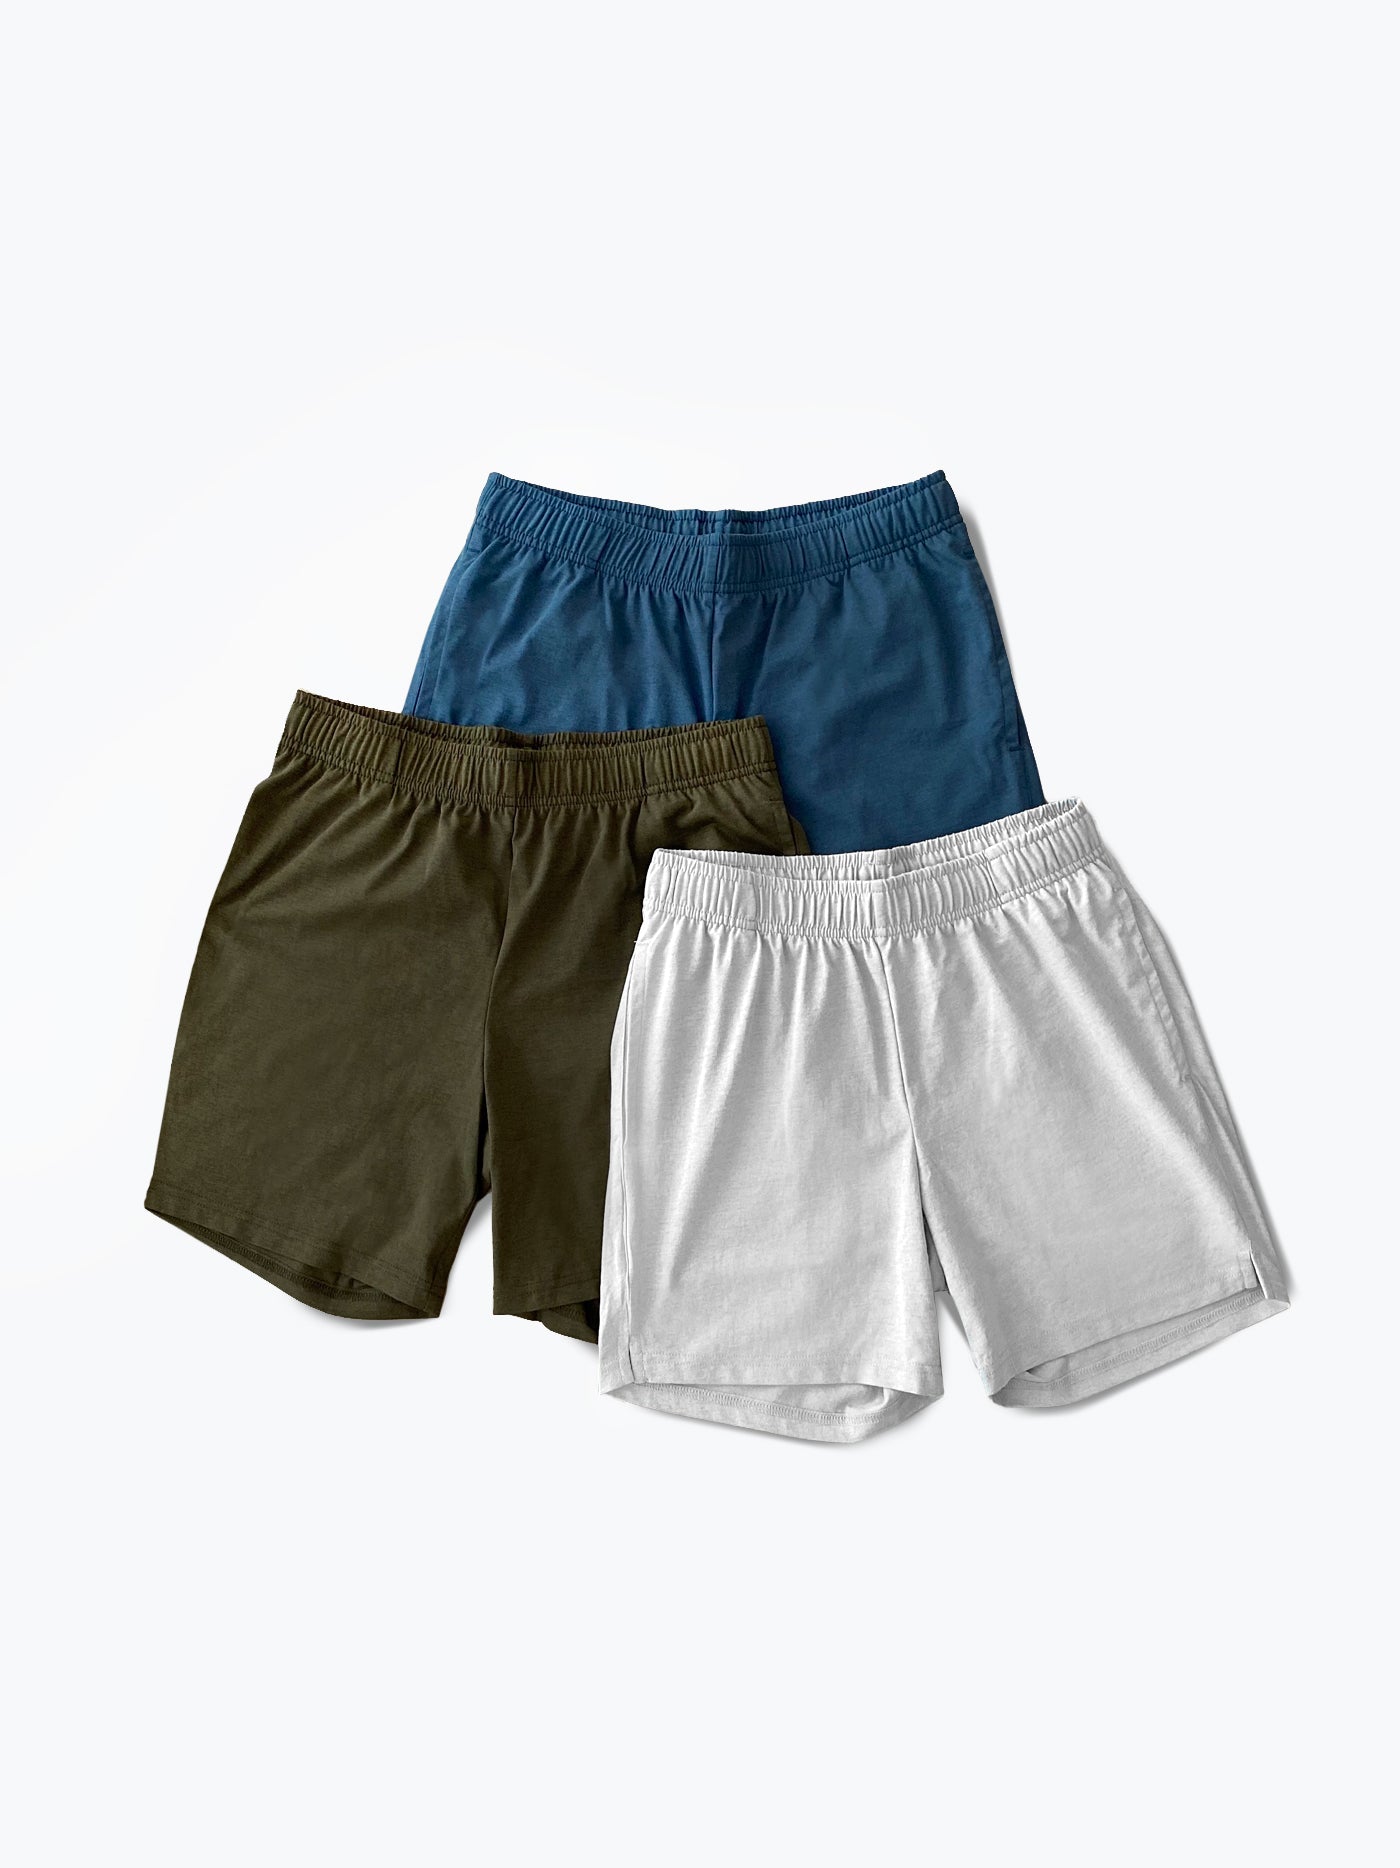 Every-Wear Shorts (Unisex)